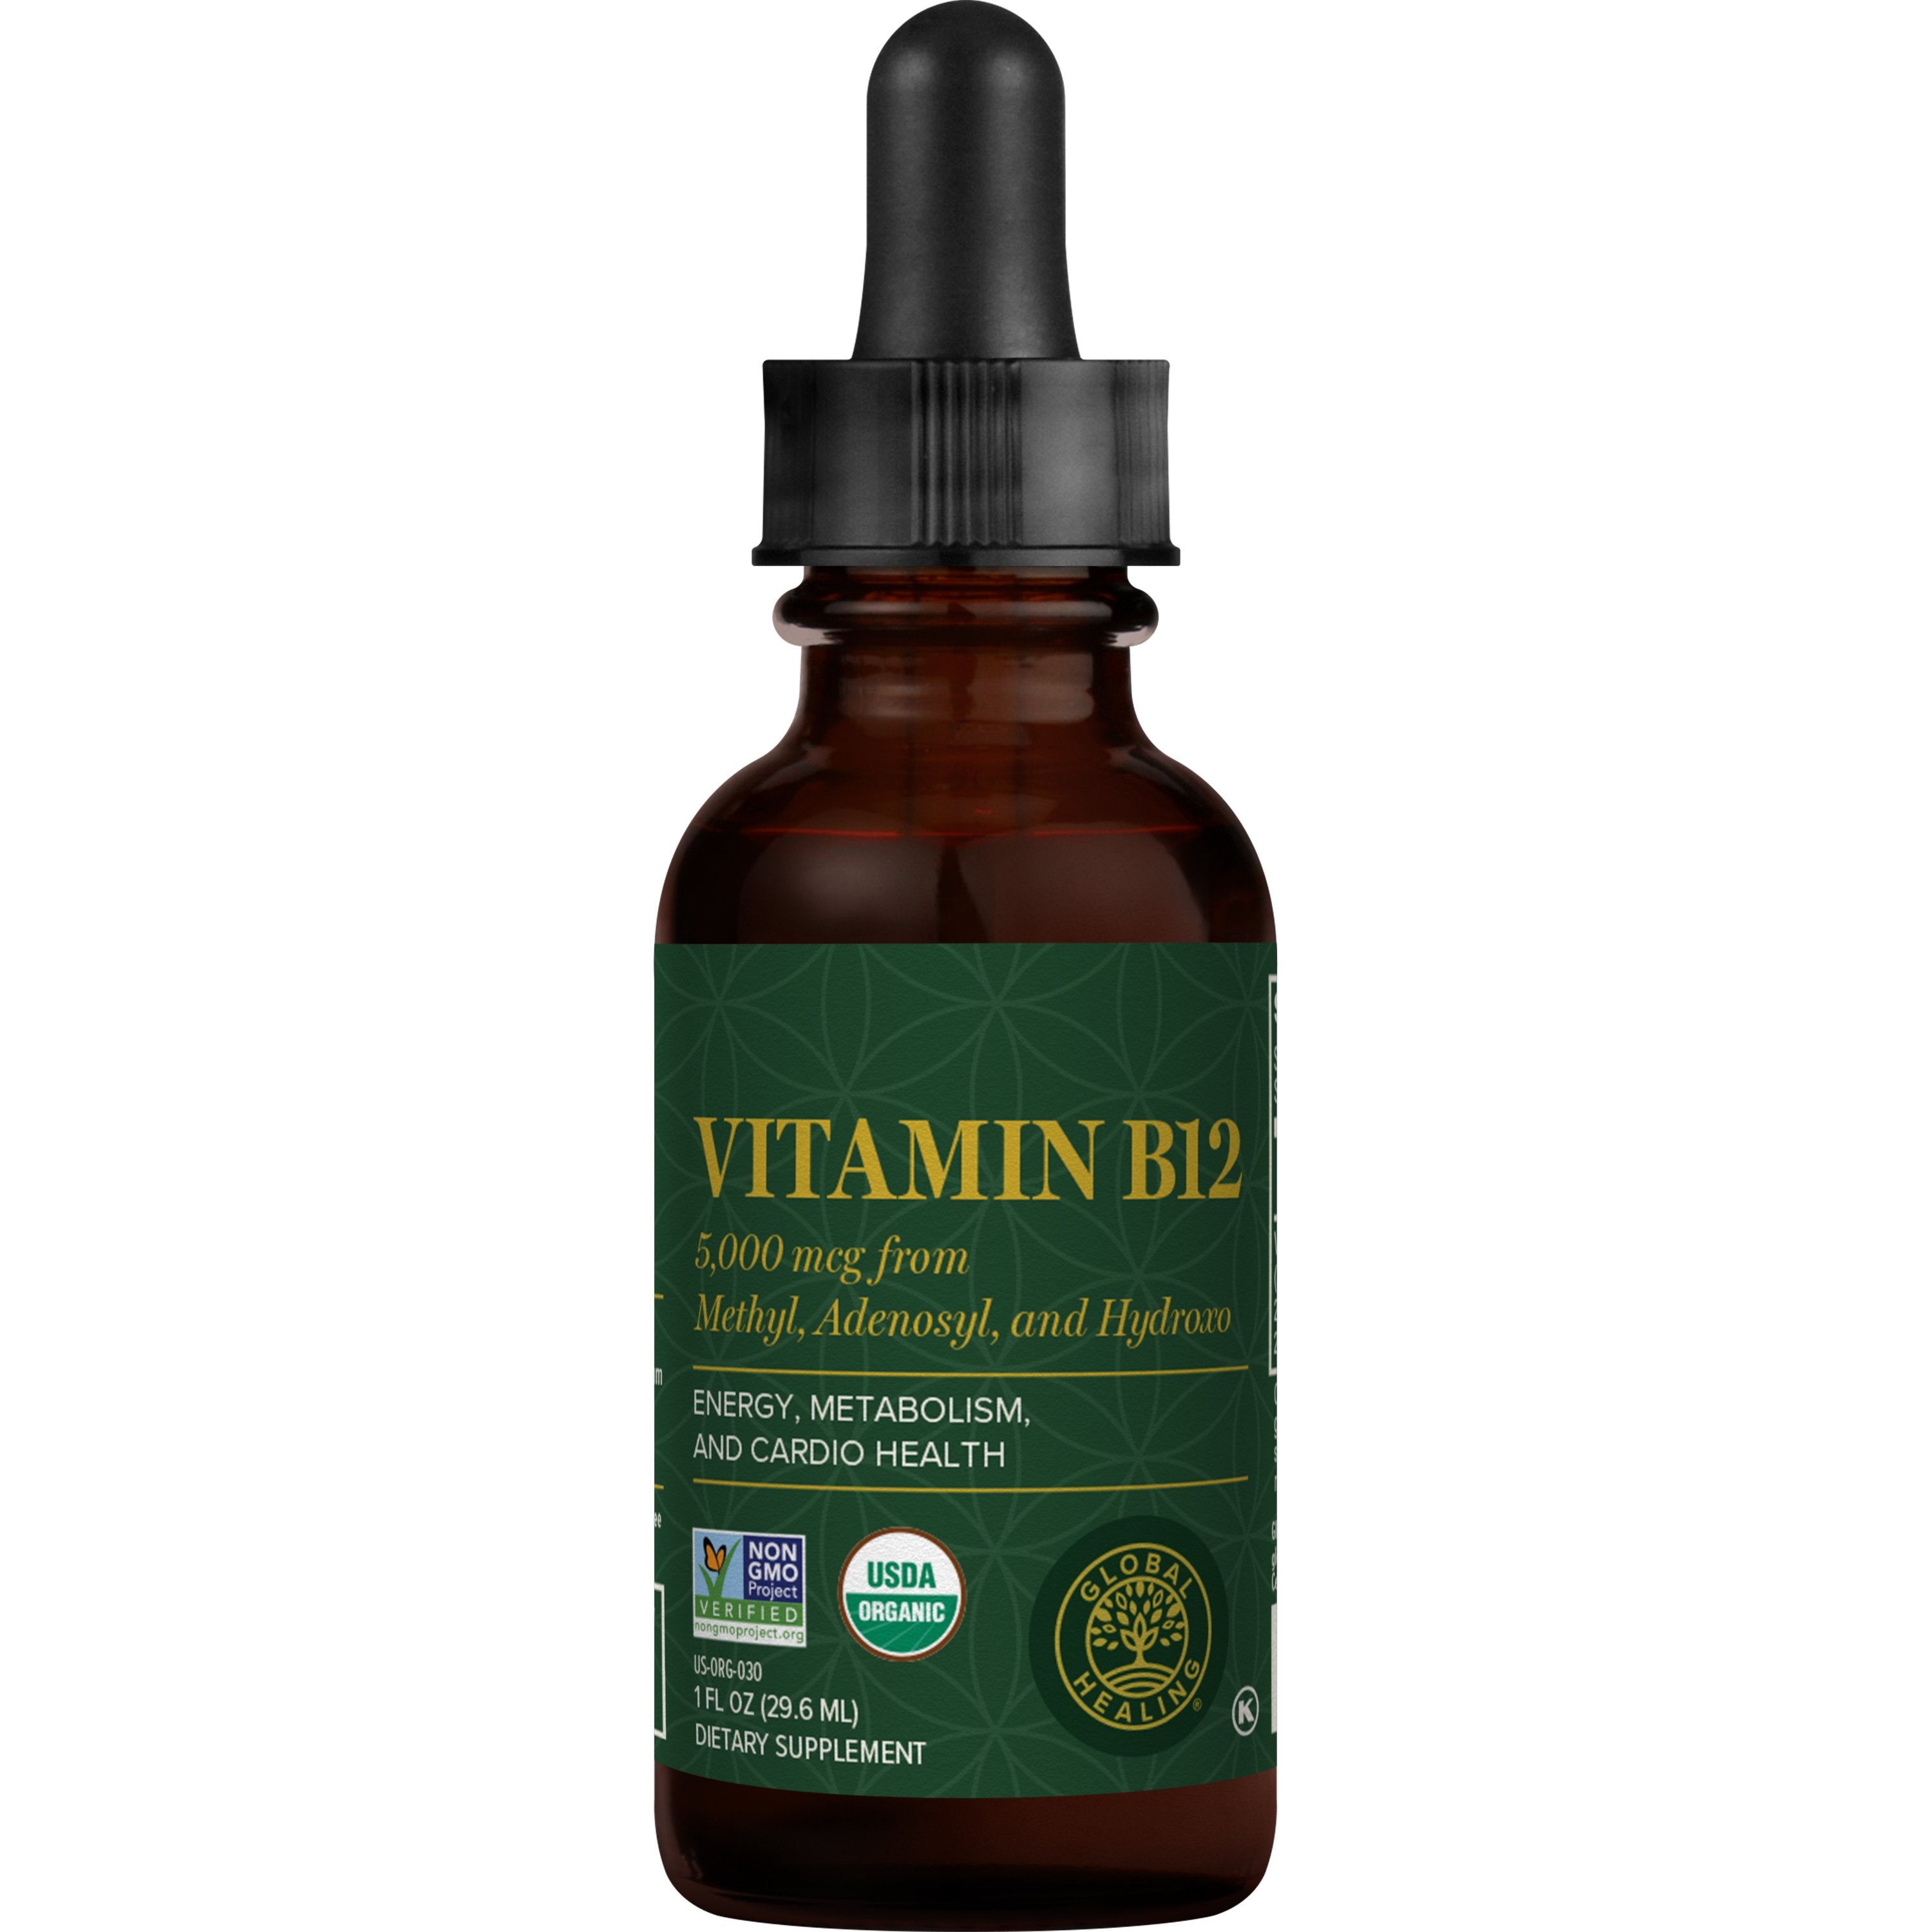 Global Healing Organic Vitamin B12 1fl Oz 29.6ml Bottle